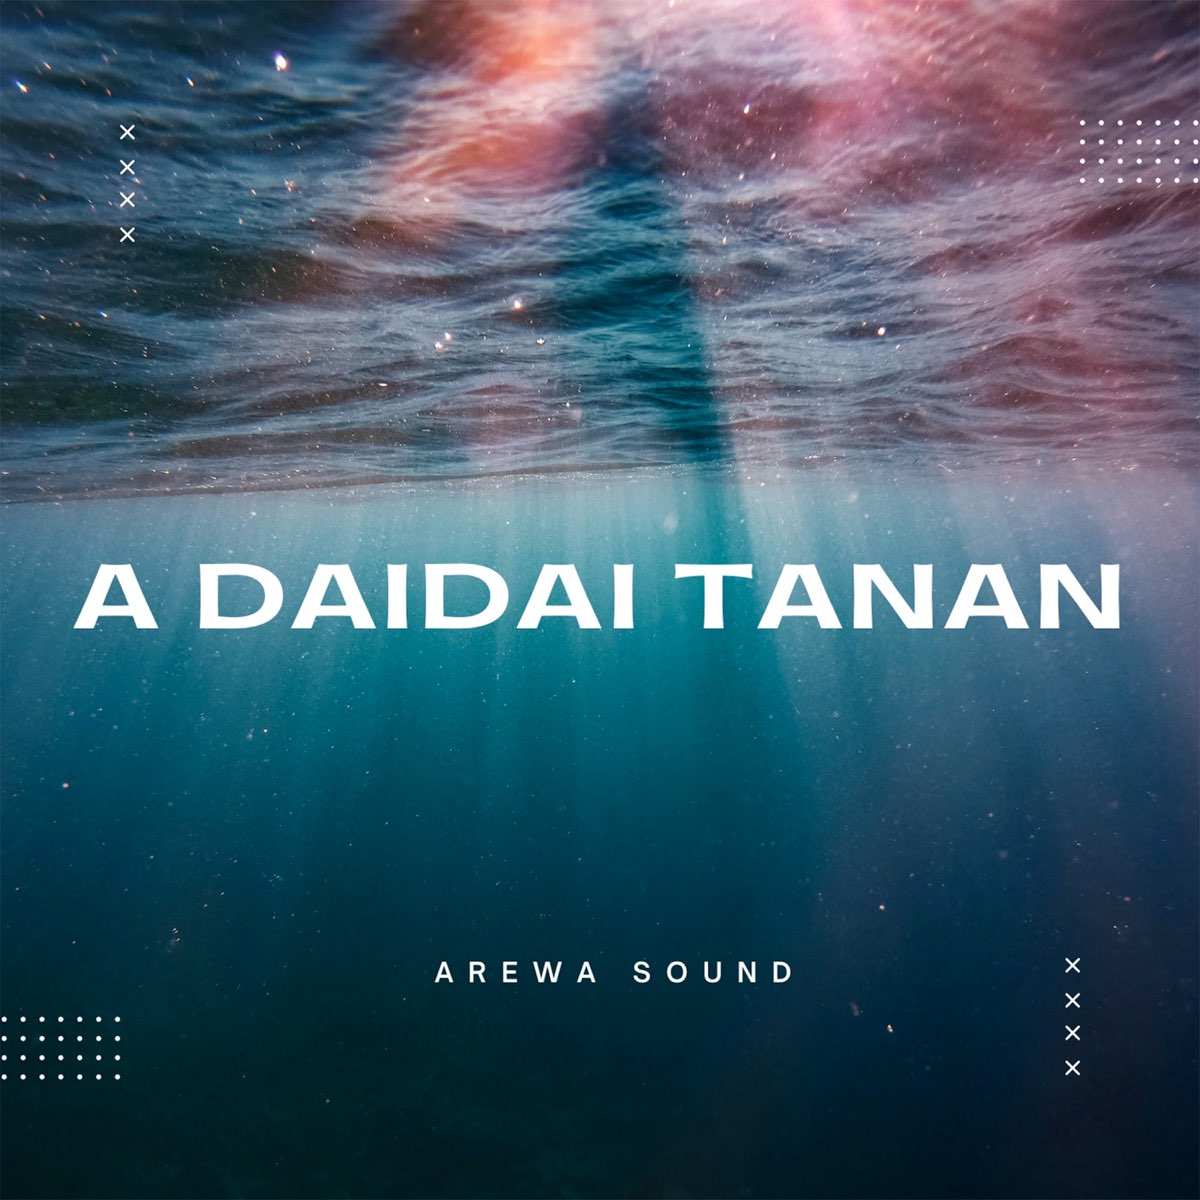 A Daidai Tanan - Single by Arewa Sound on Apple Music